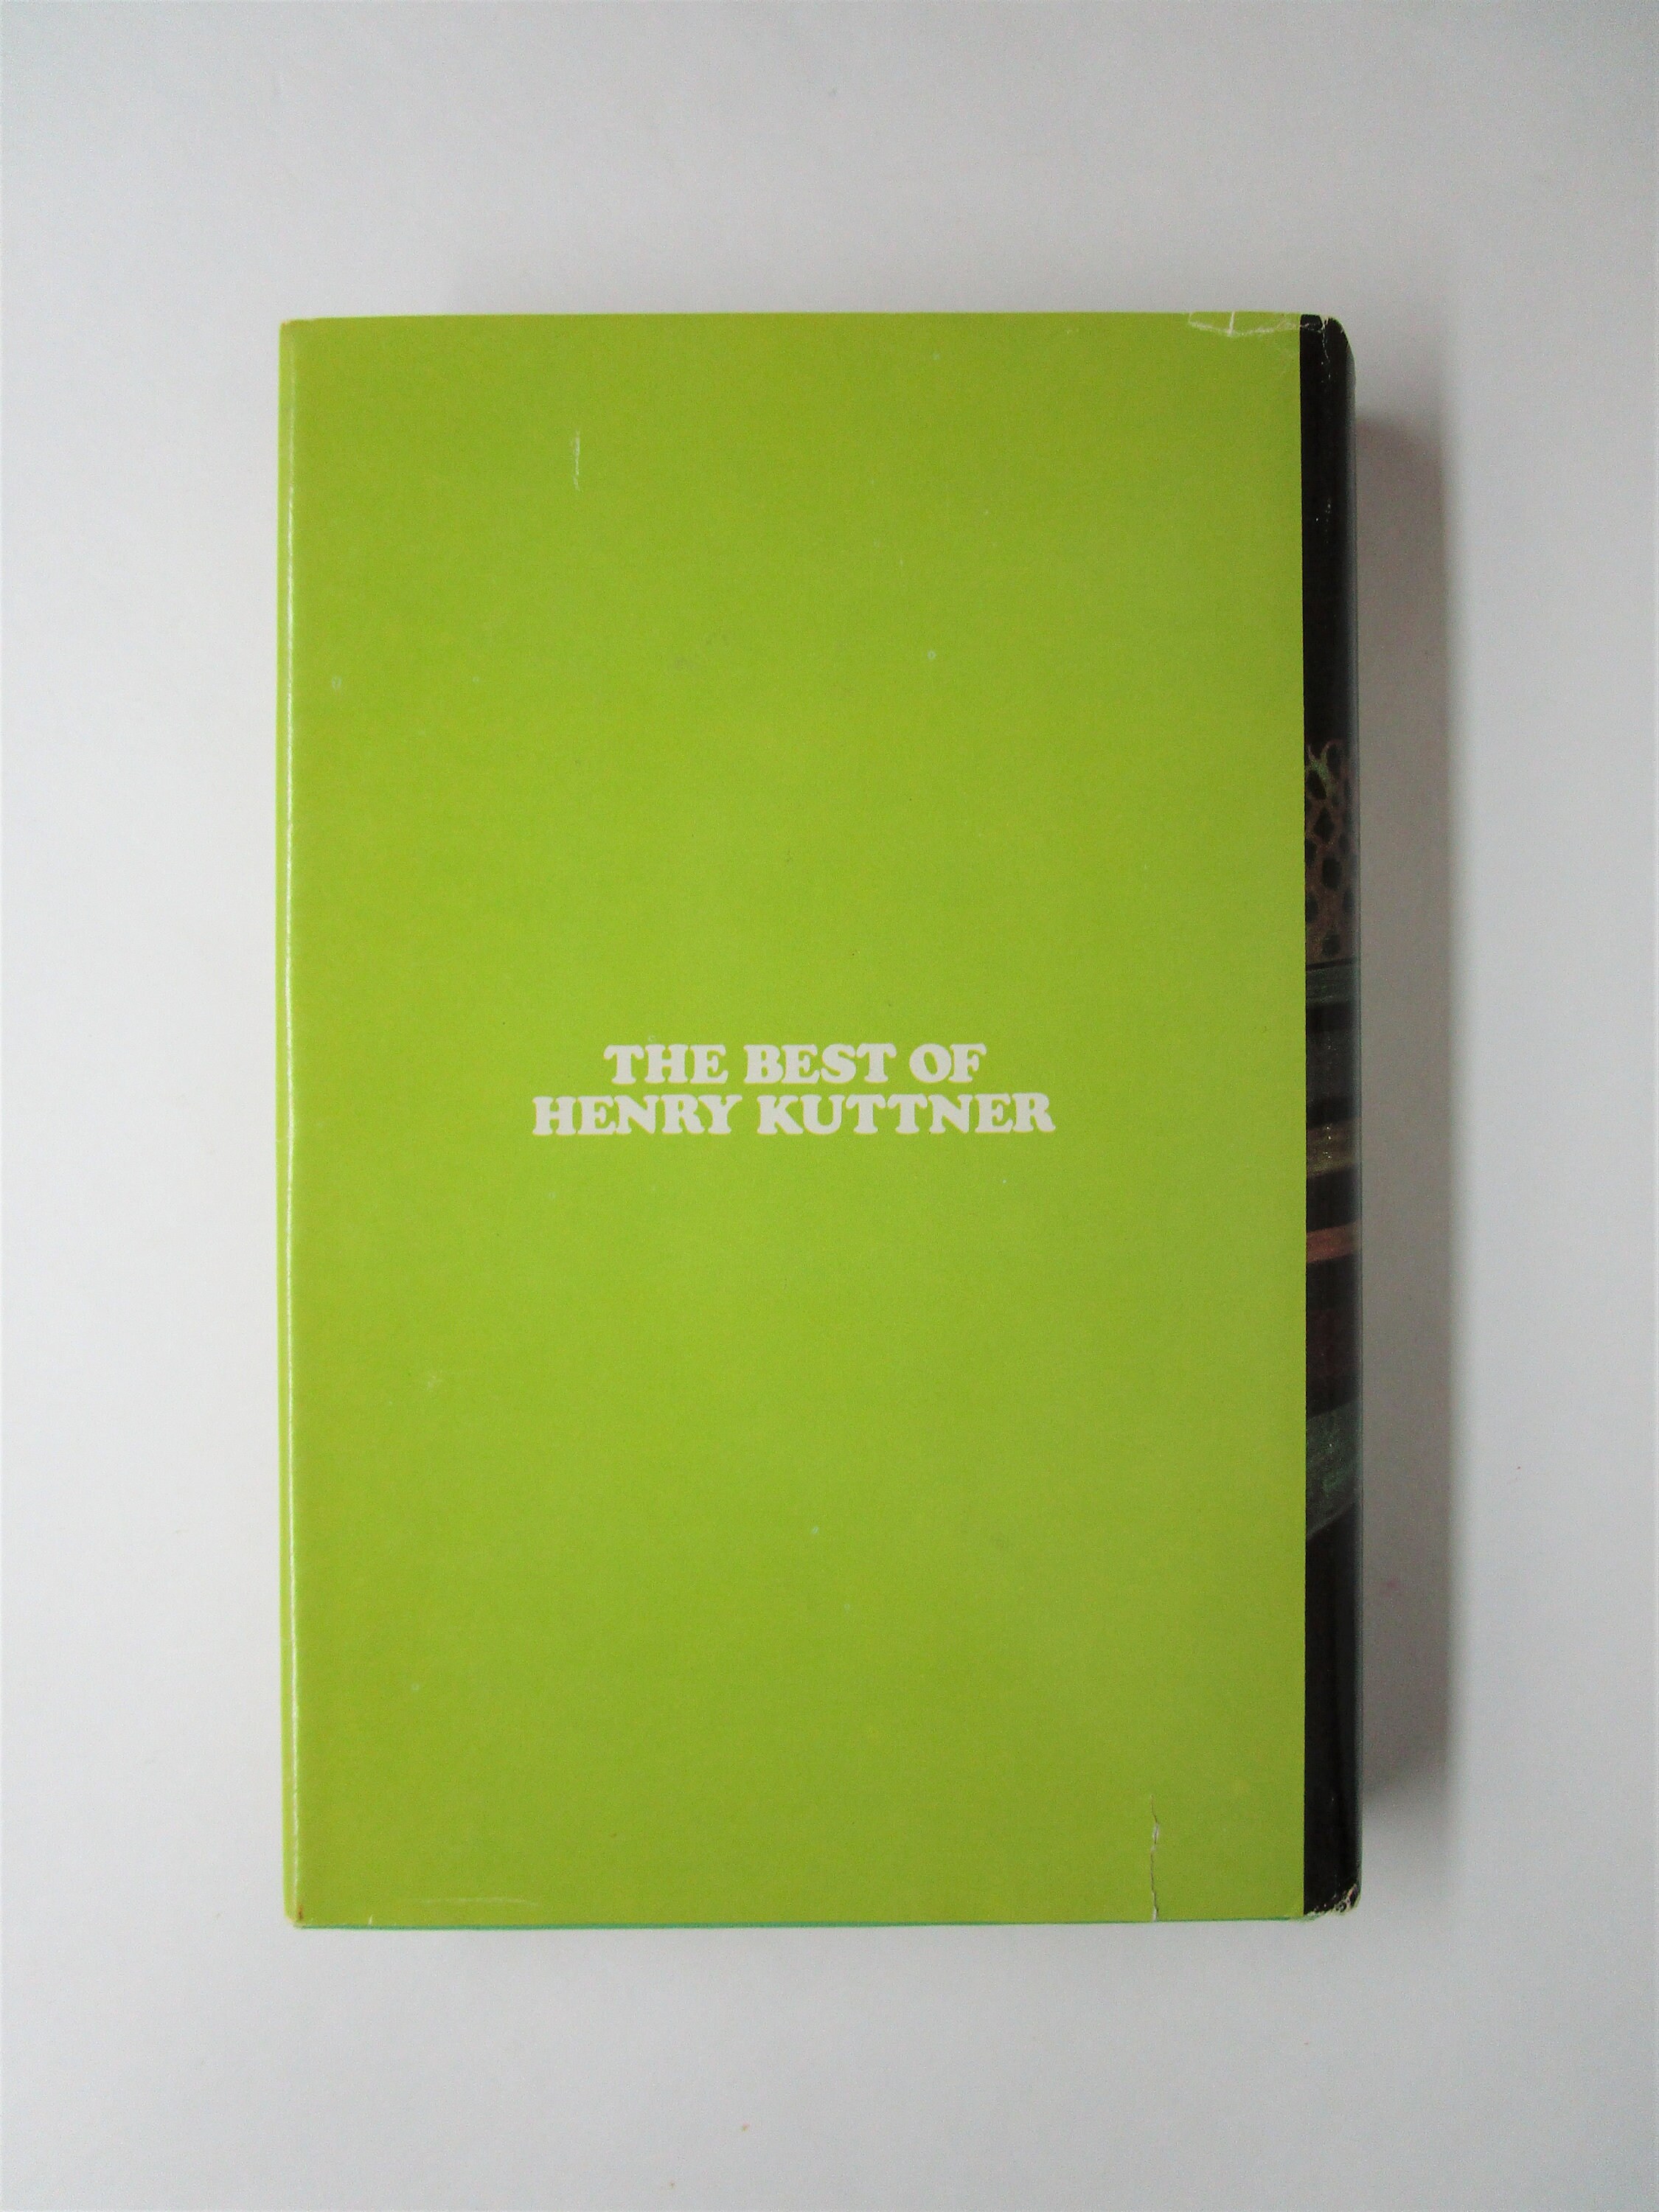 The Best of Henry Kuttner W/intro by Ray Bradbury, 1st Book Club